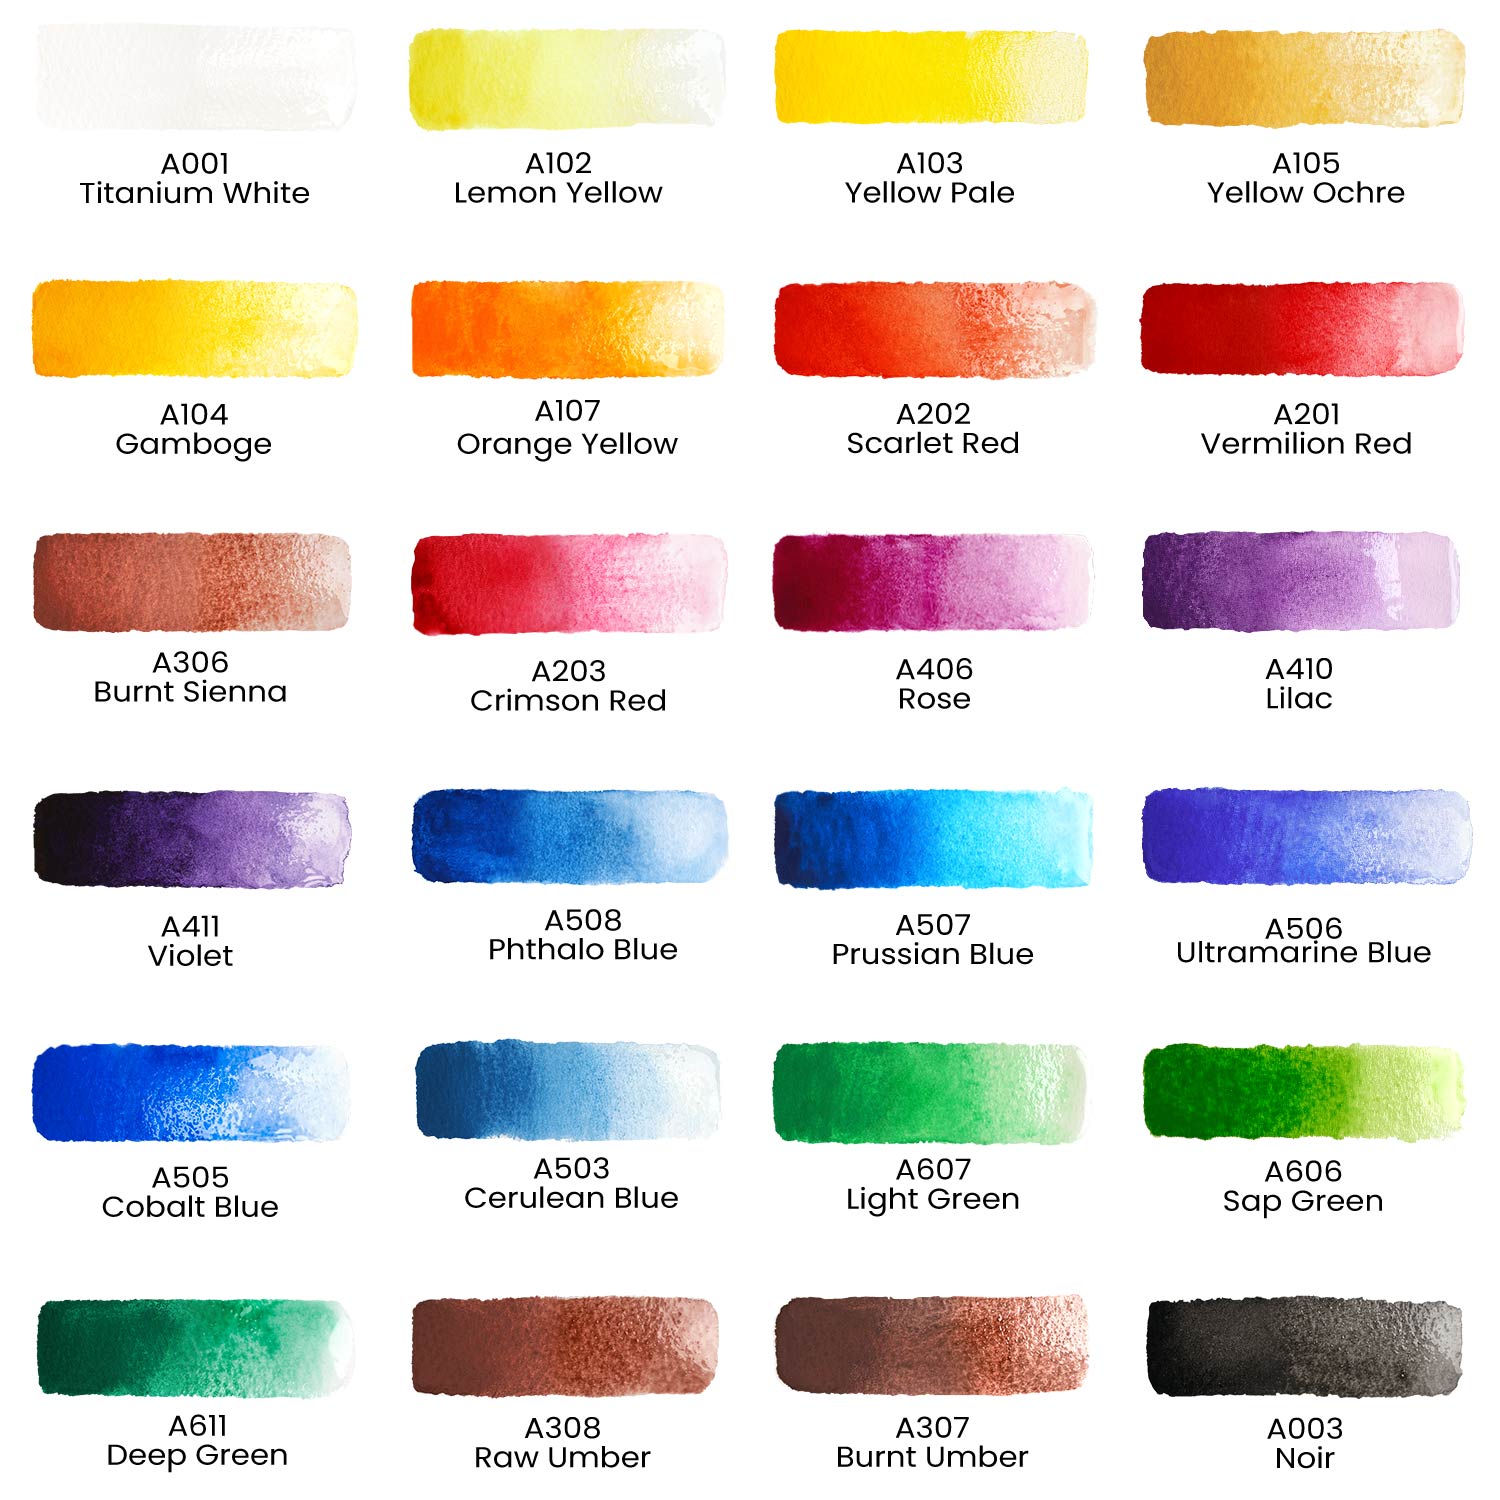 Arteza® Kids Watercolor Kit, 25 Assorted Colors